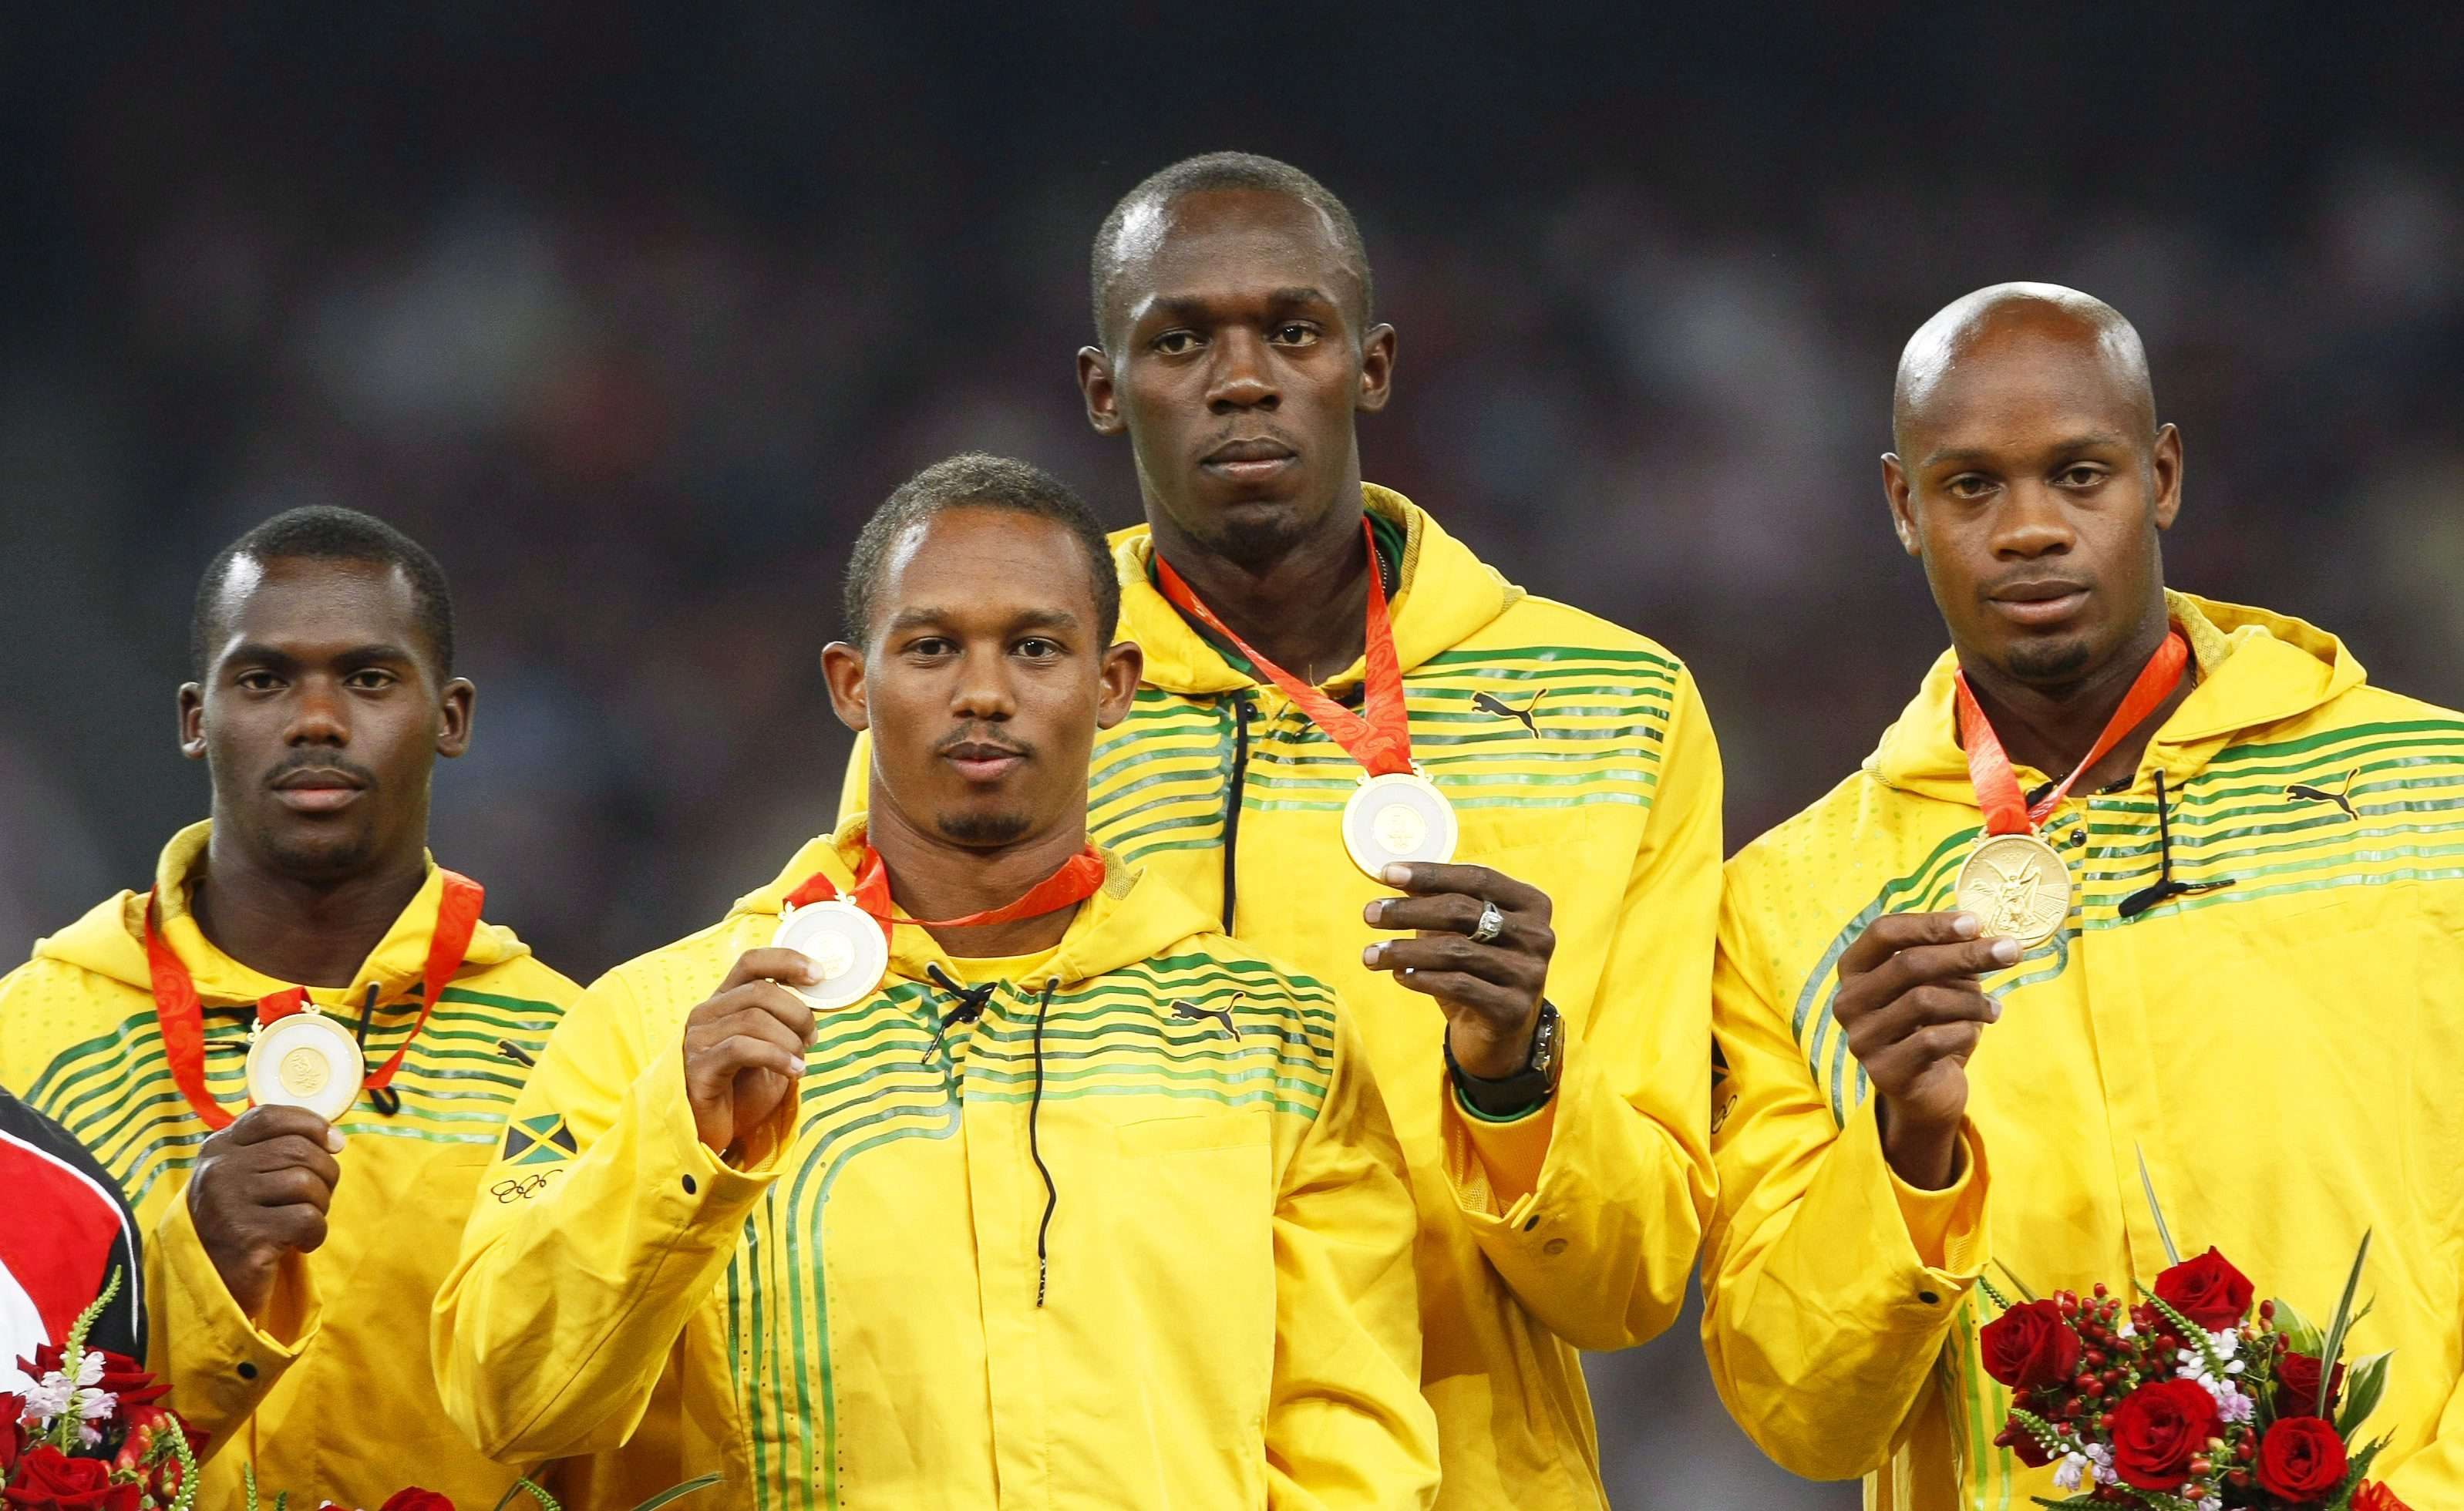 Nesta Carter (left), Michael Frater, Usain Bolt, and Asafa Powell in 2008. Photo: EPA